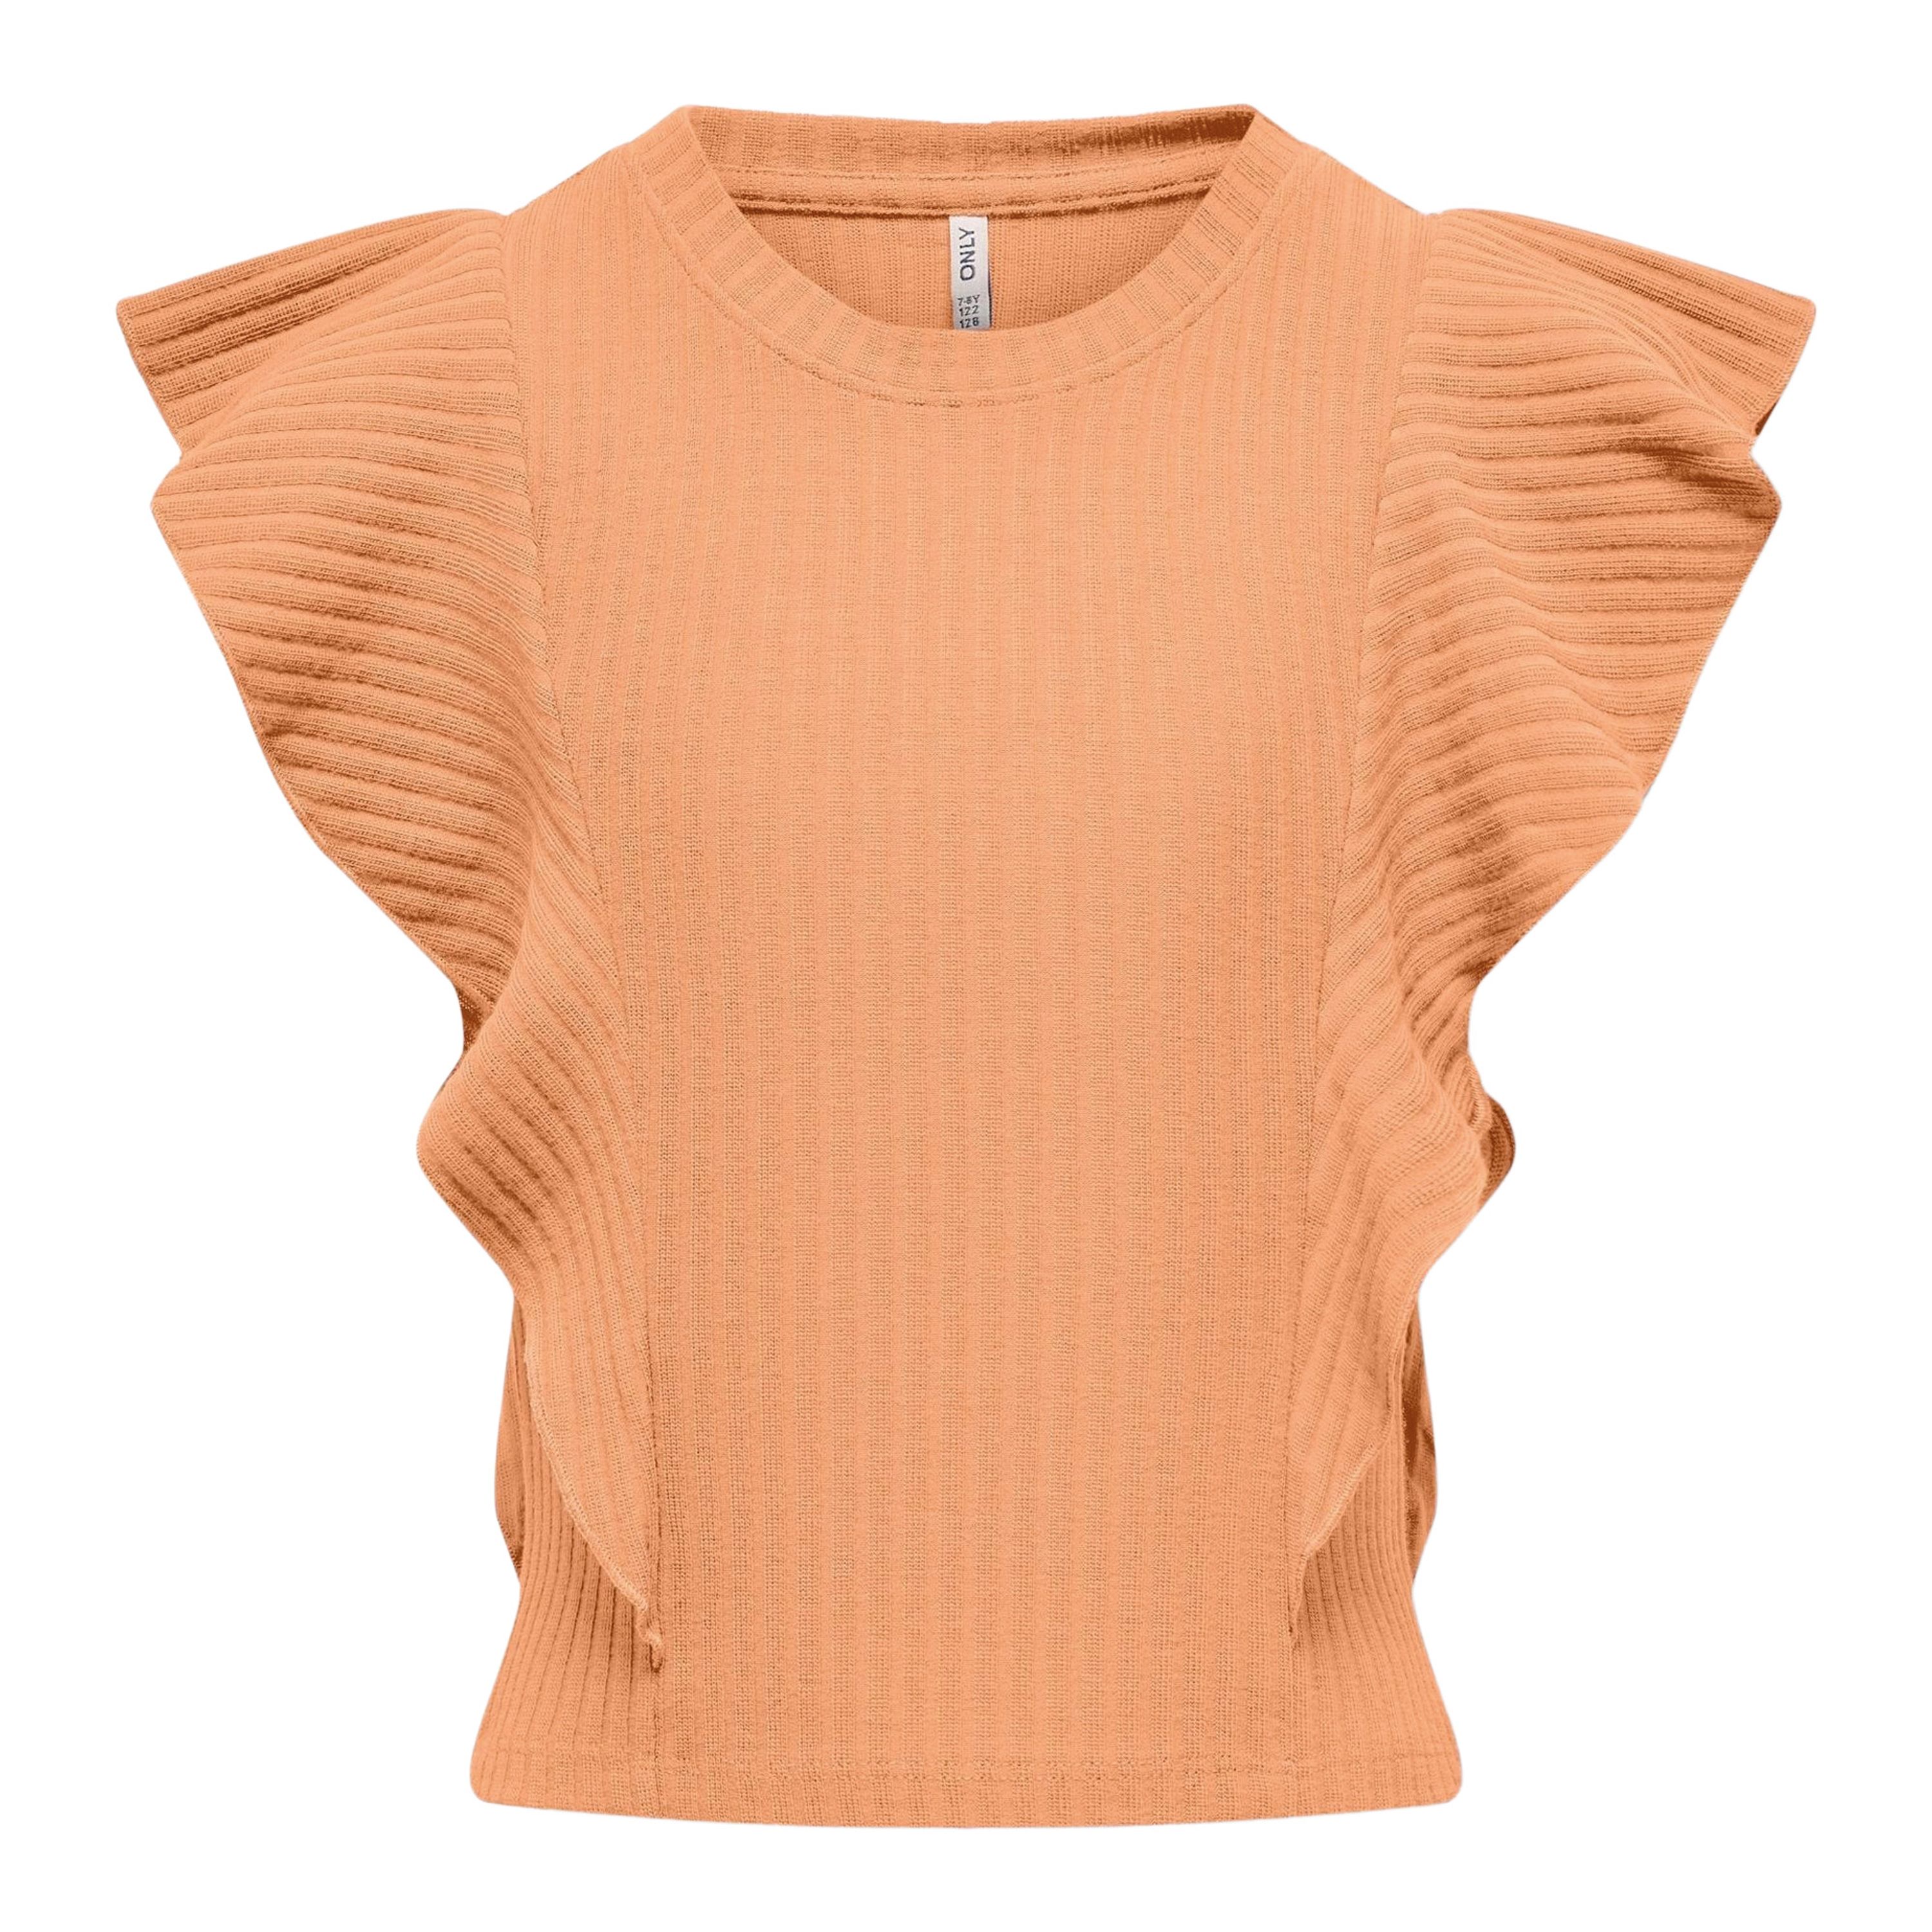 Only KIDS GIRL T-shirt KOGNELLA oranje Top Meisjes Polyester Ronde hals 158 164